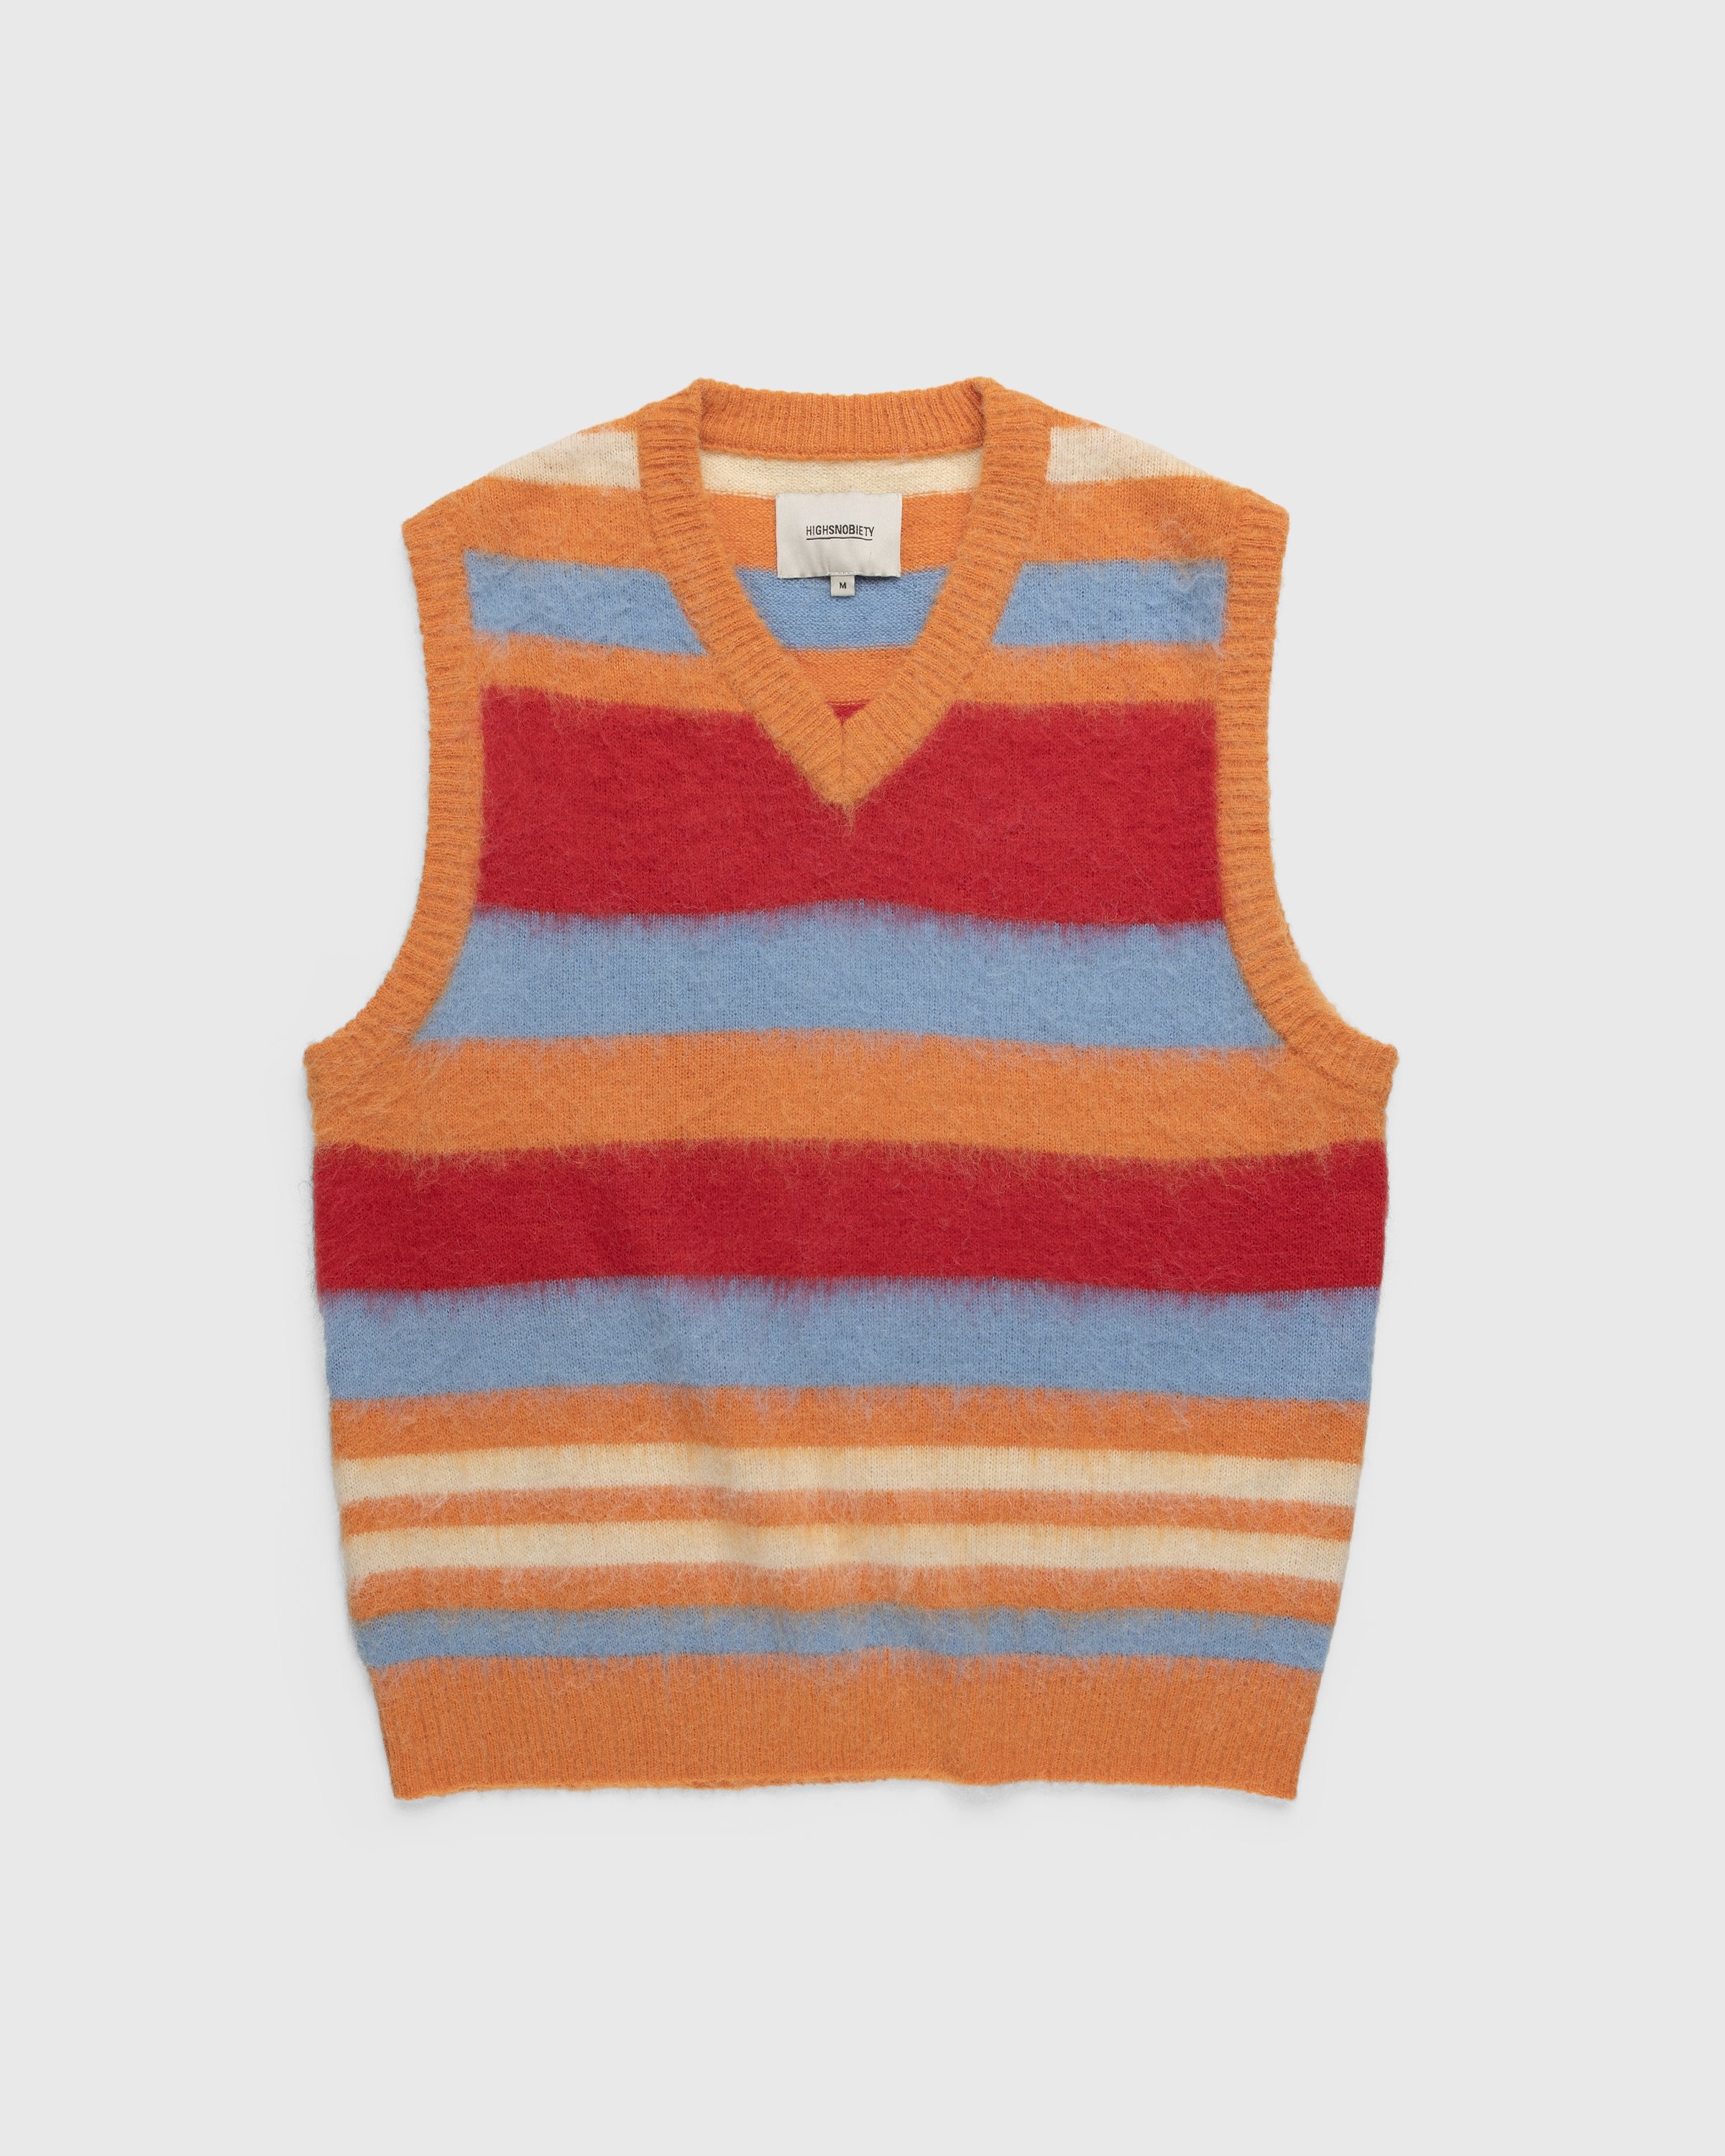 Bezighouden Inactief Blijven Highsnobiety – Striped V-Neck Sweater Vest Burnt Orange | Highsnobiety Shop